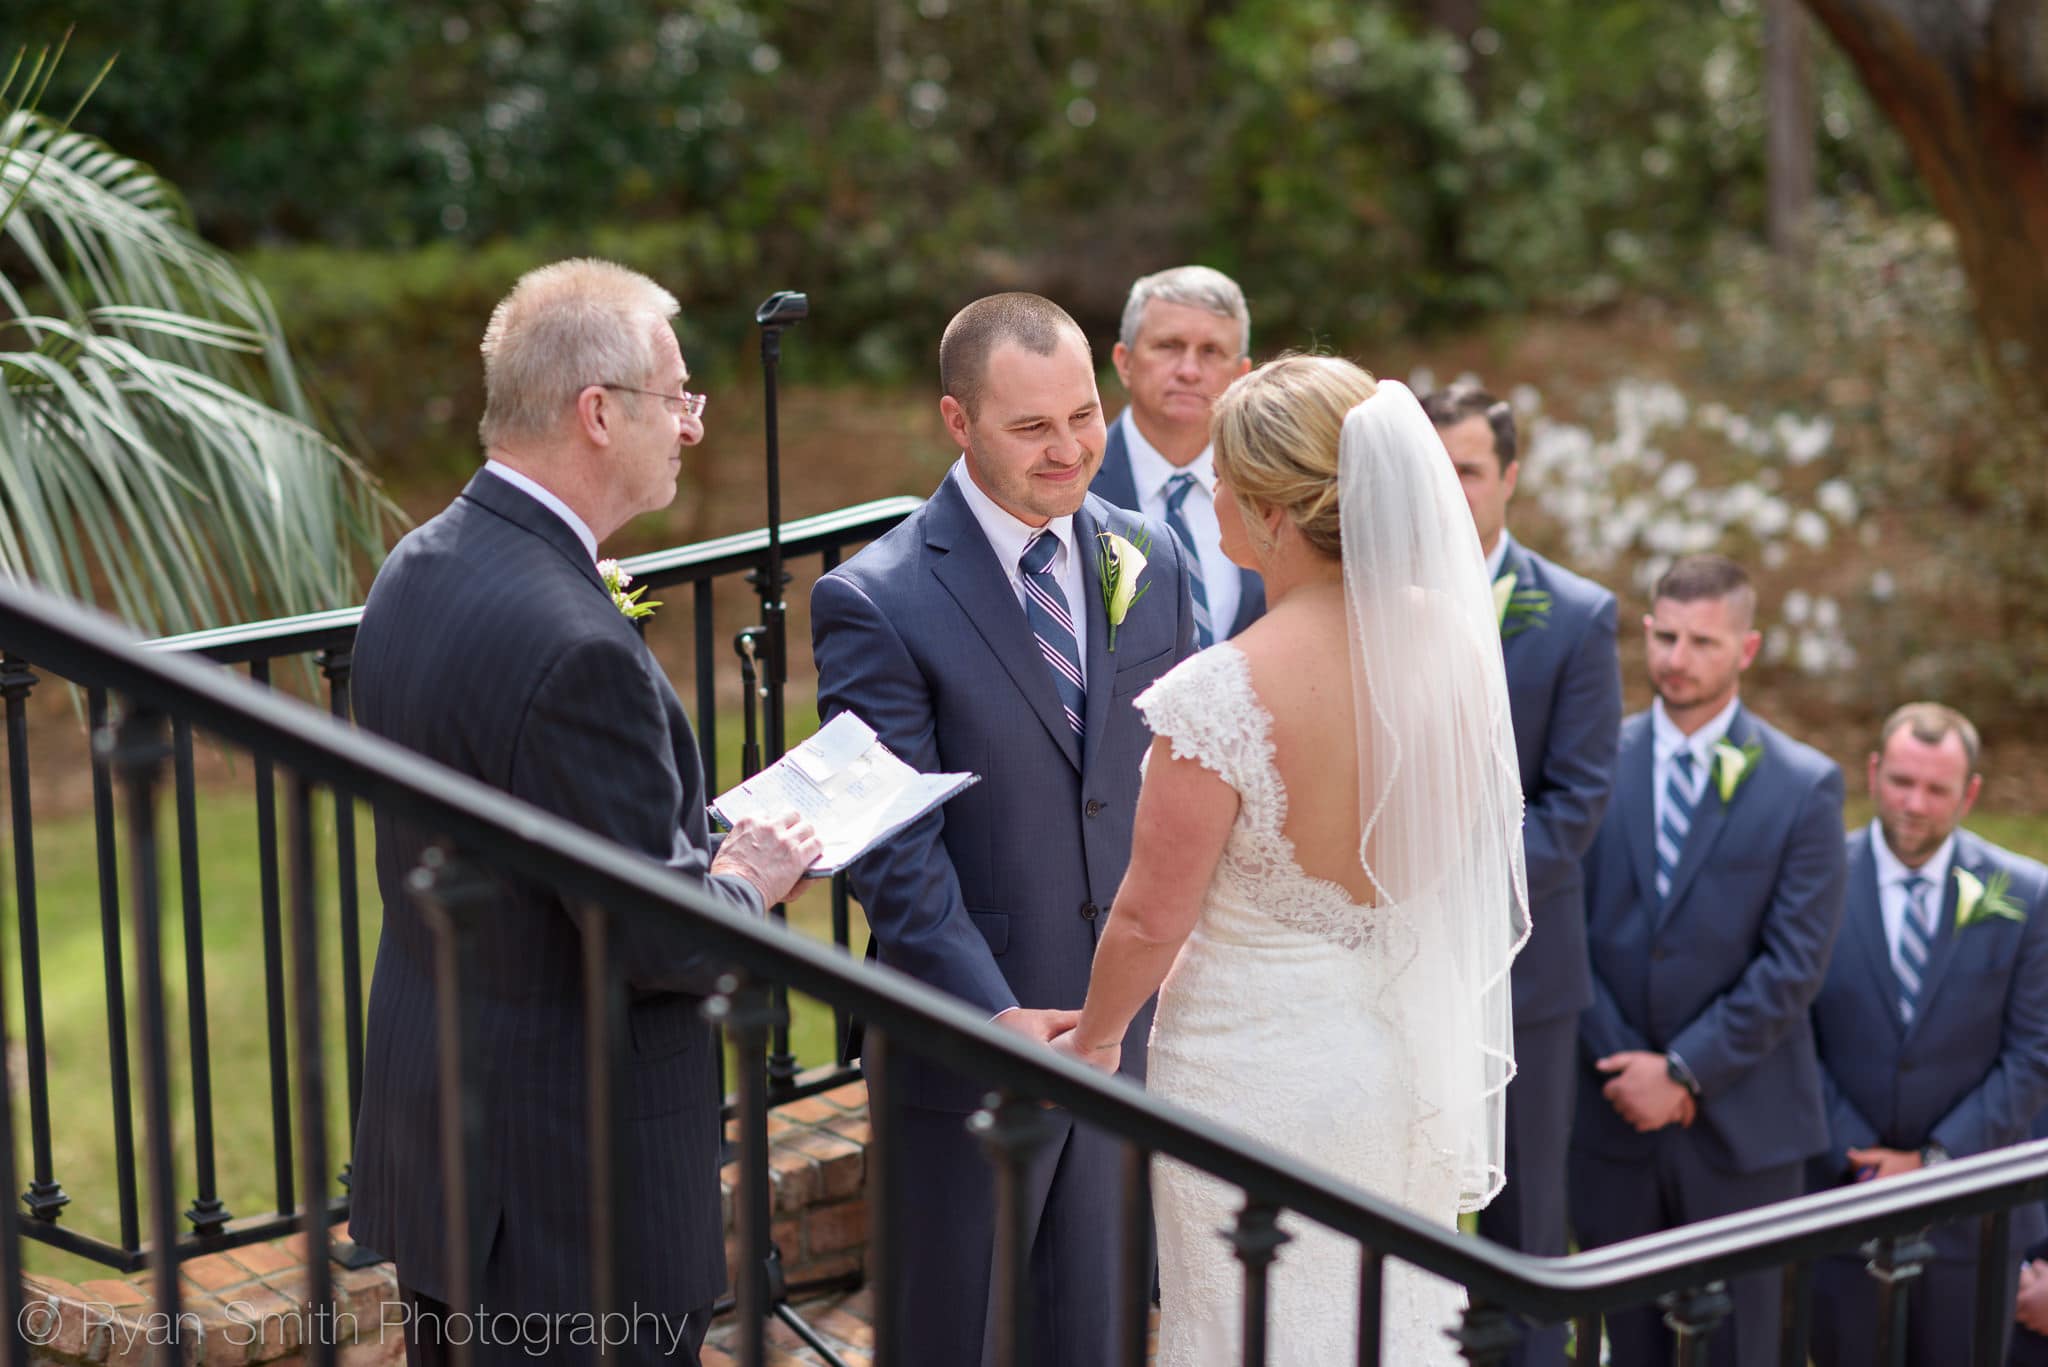 Bride giving vows to groom - Pawleys Plantation